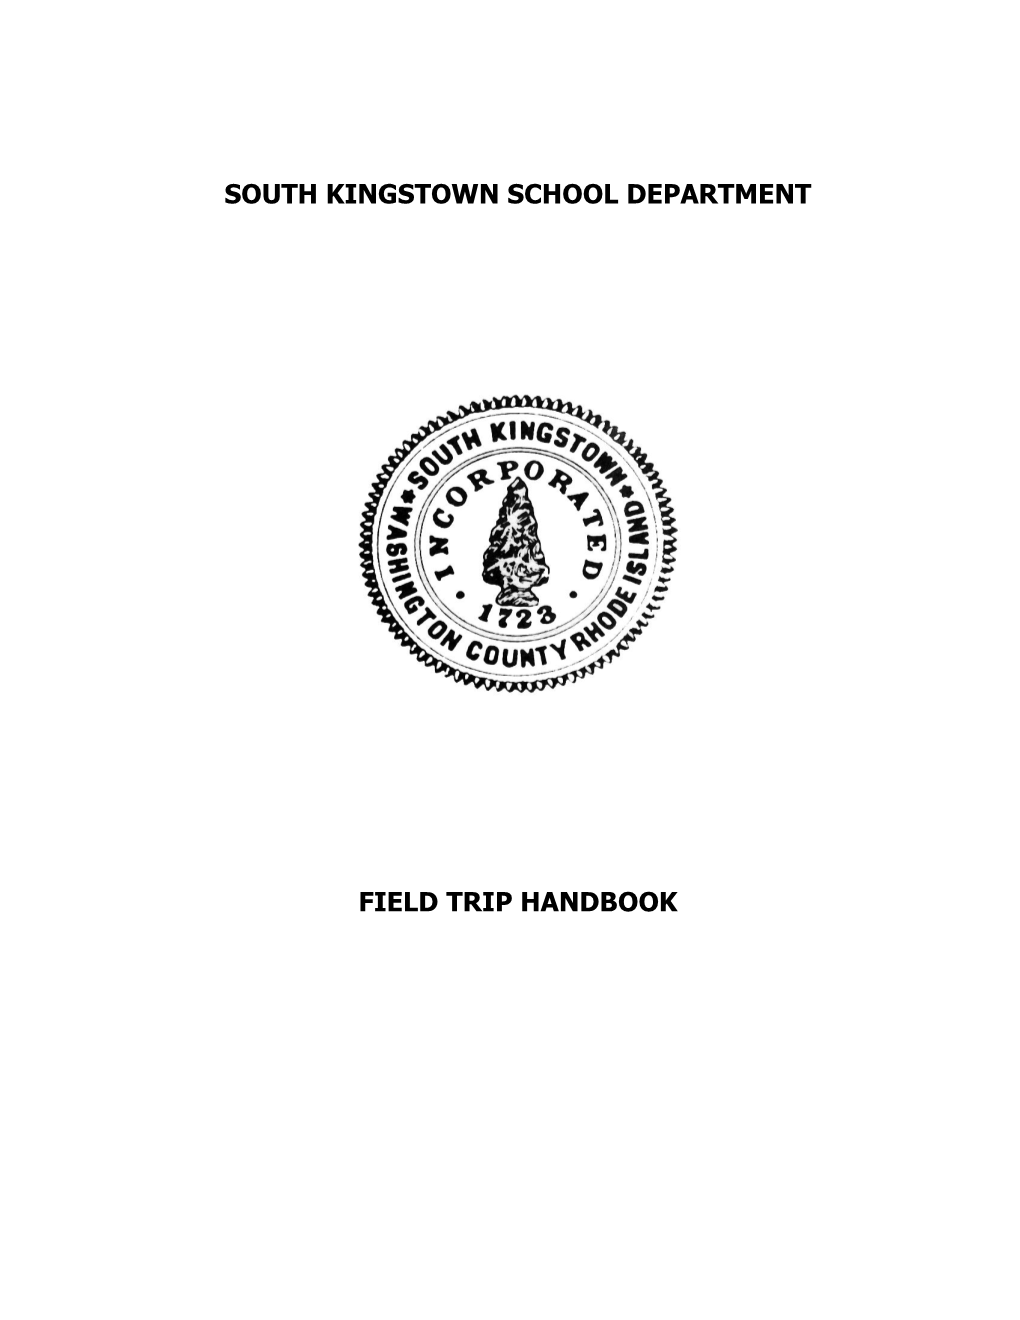 Fieldtrip Handbook